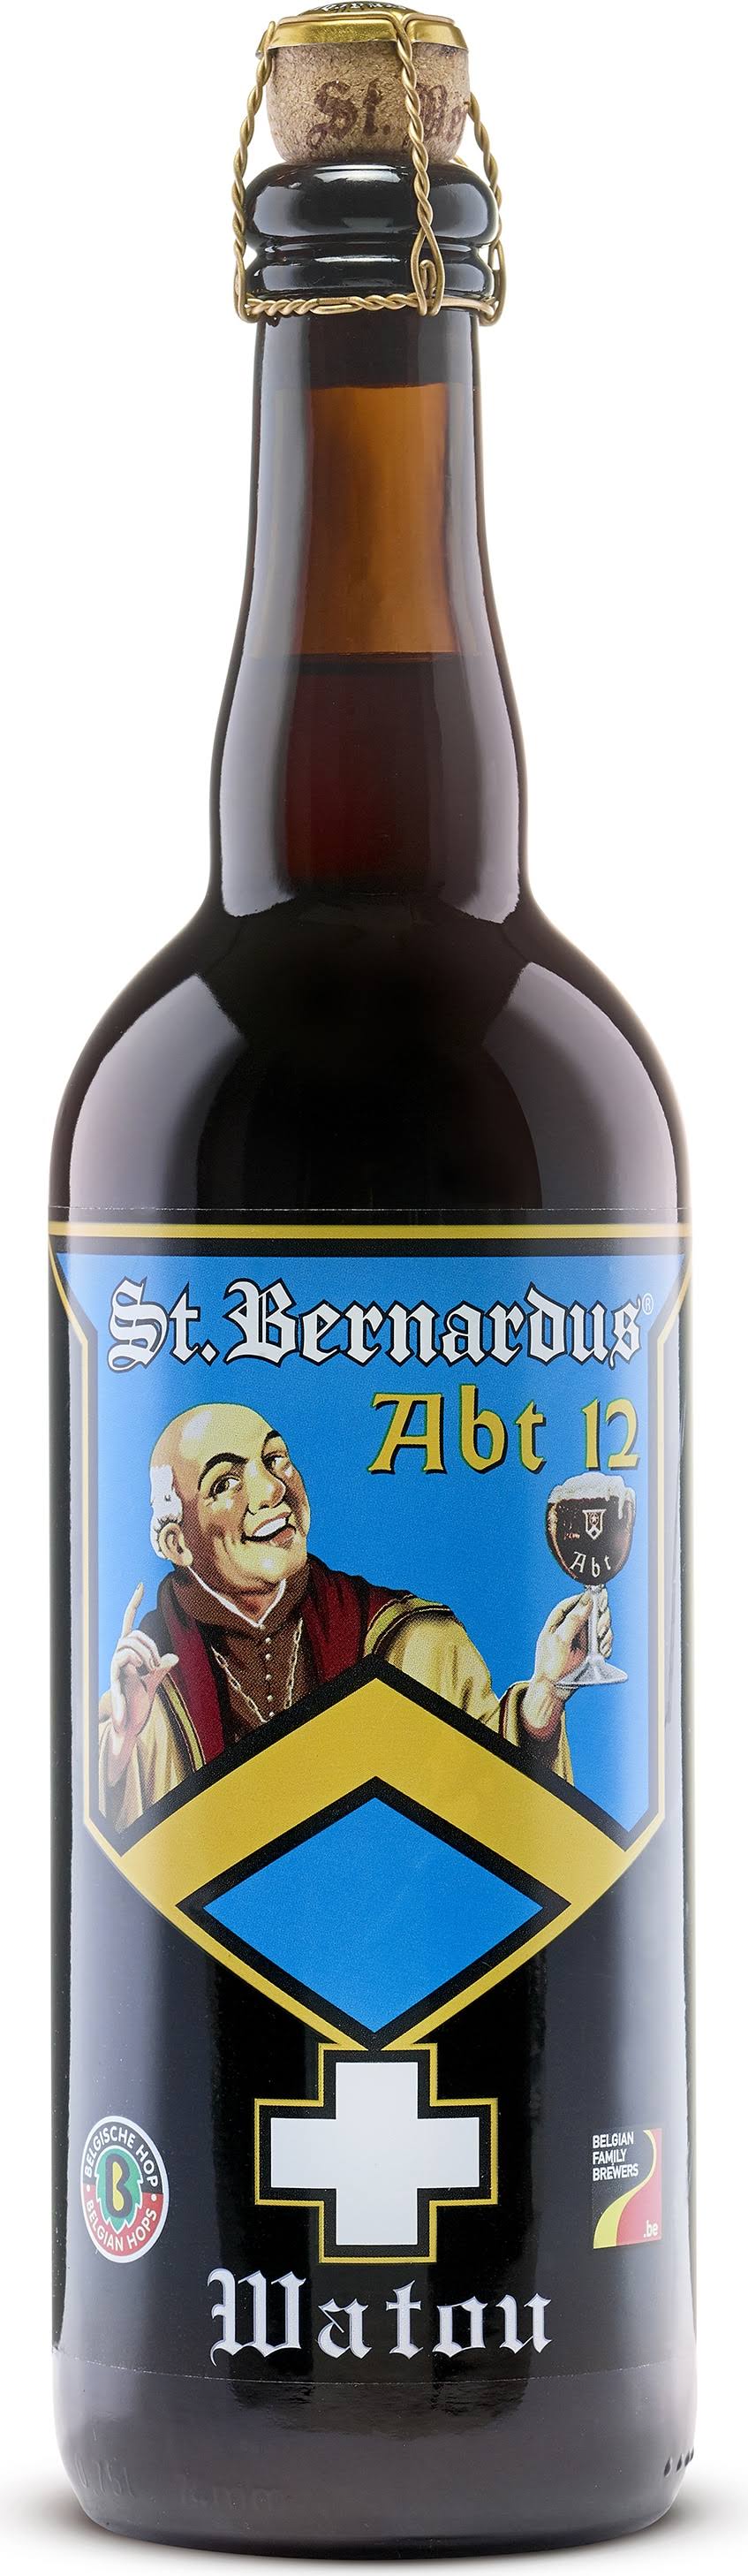 St Bernardus ABT 12 Ale Beer Bottle - 750ml